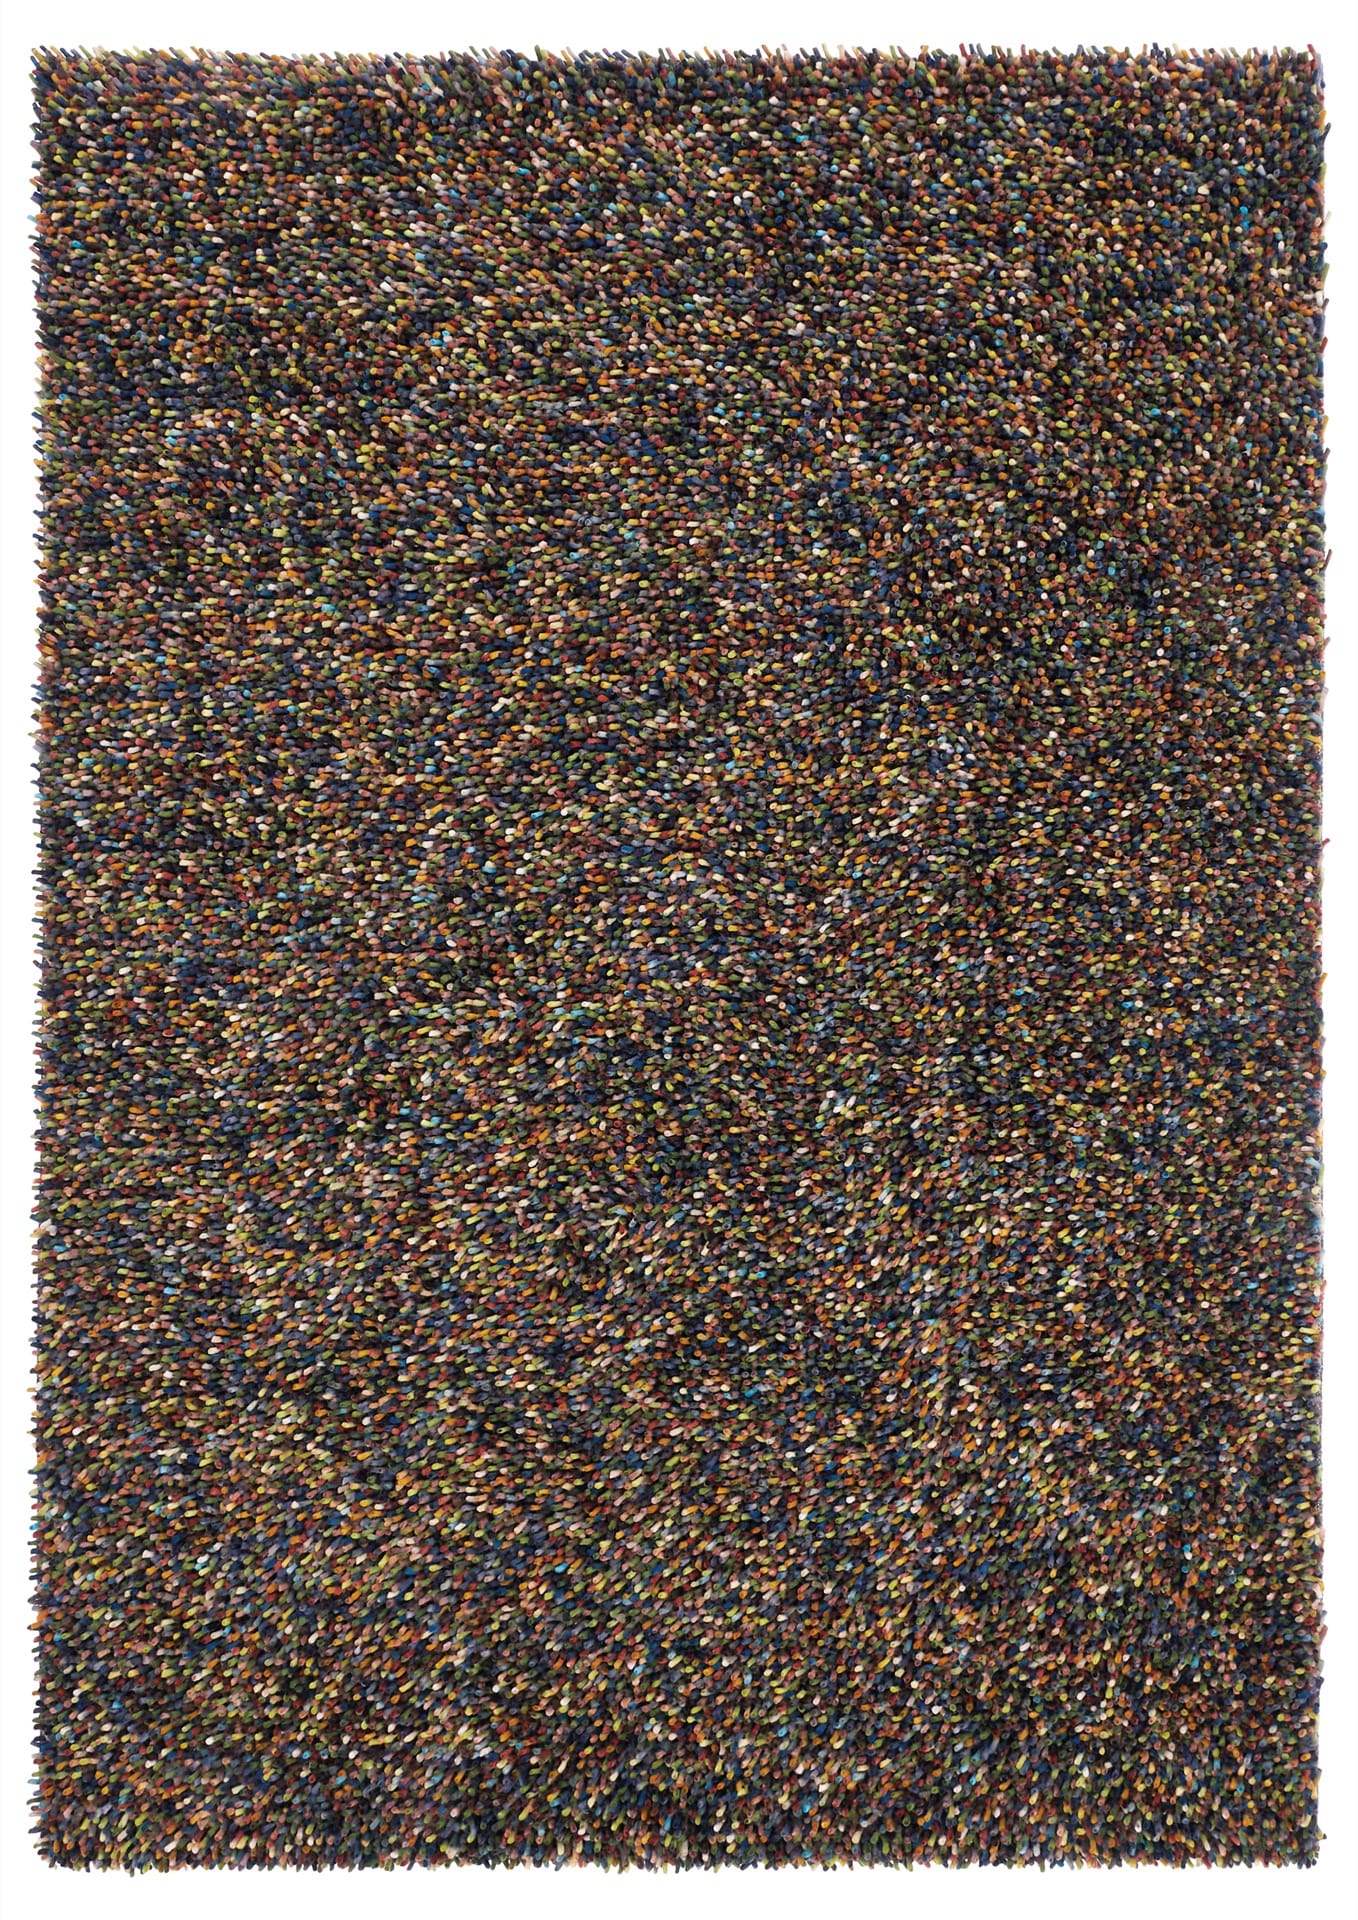 Dots 170407 rug by Brink